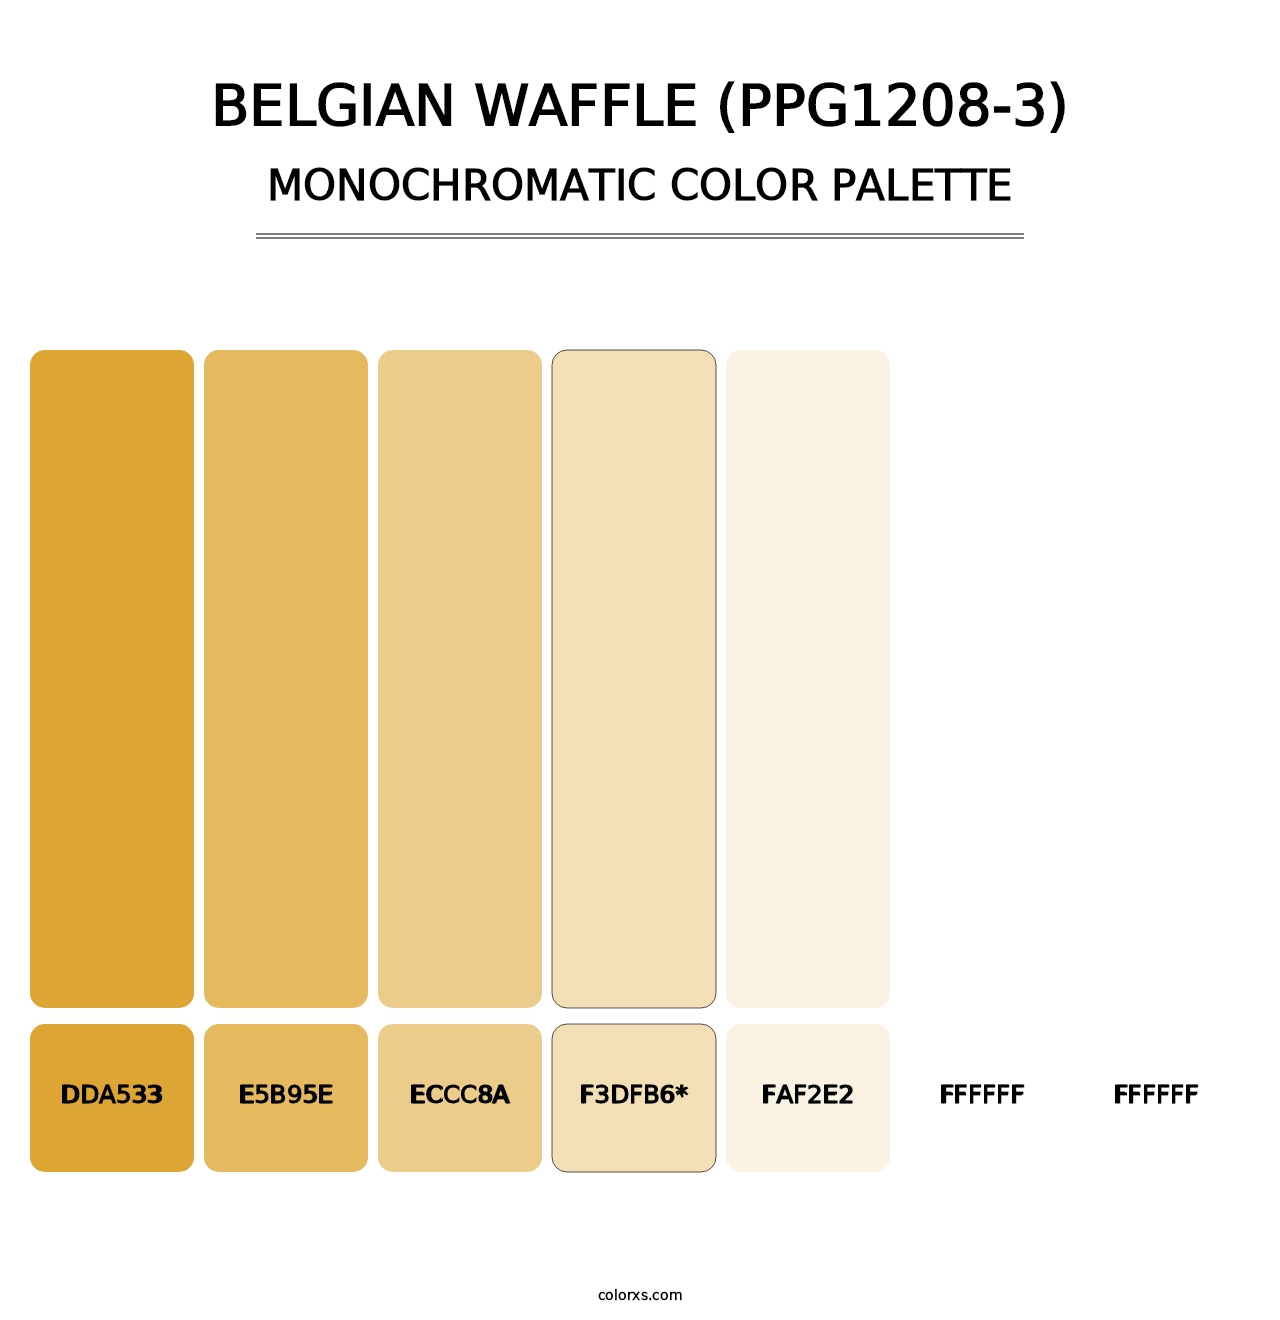 Belgian Waffle (PPG1208-3) - Monochromatic Color Palette